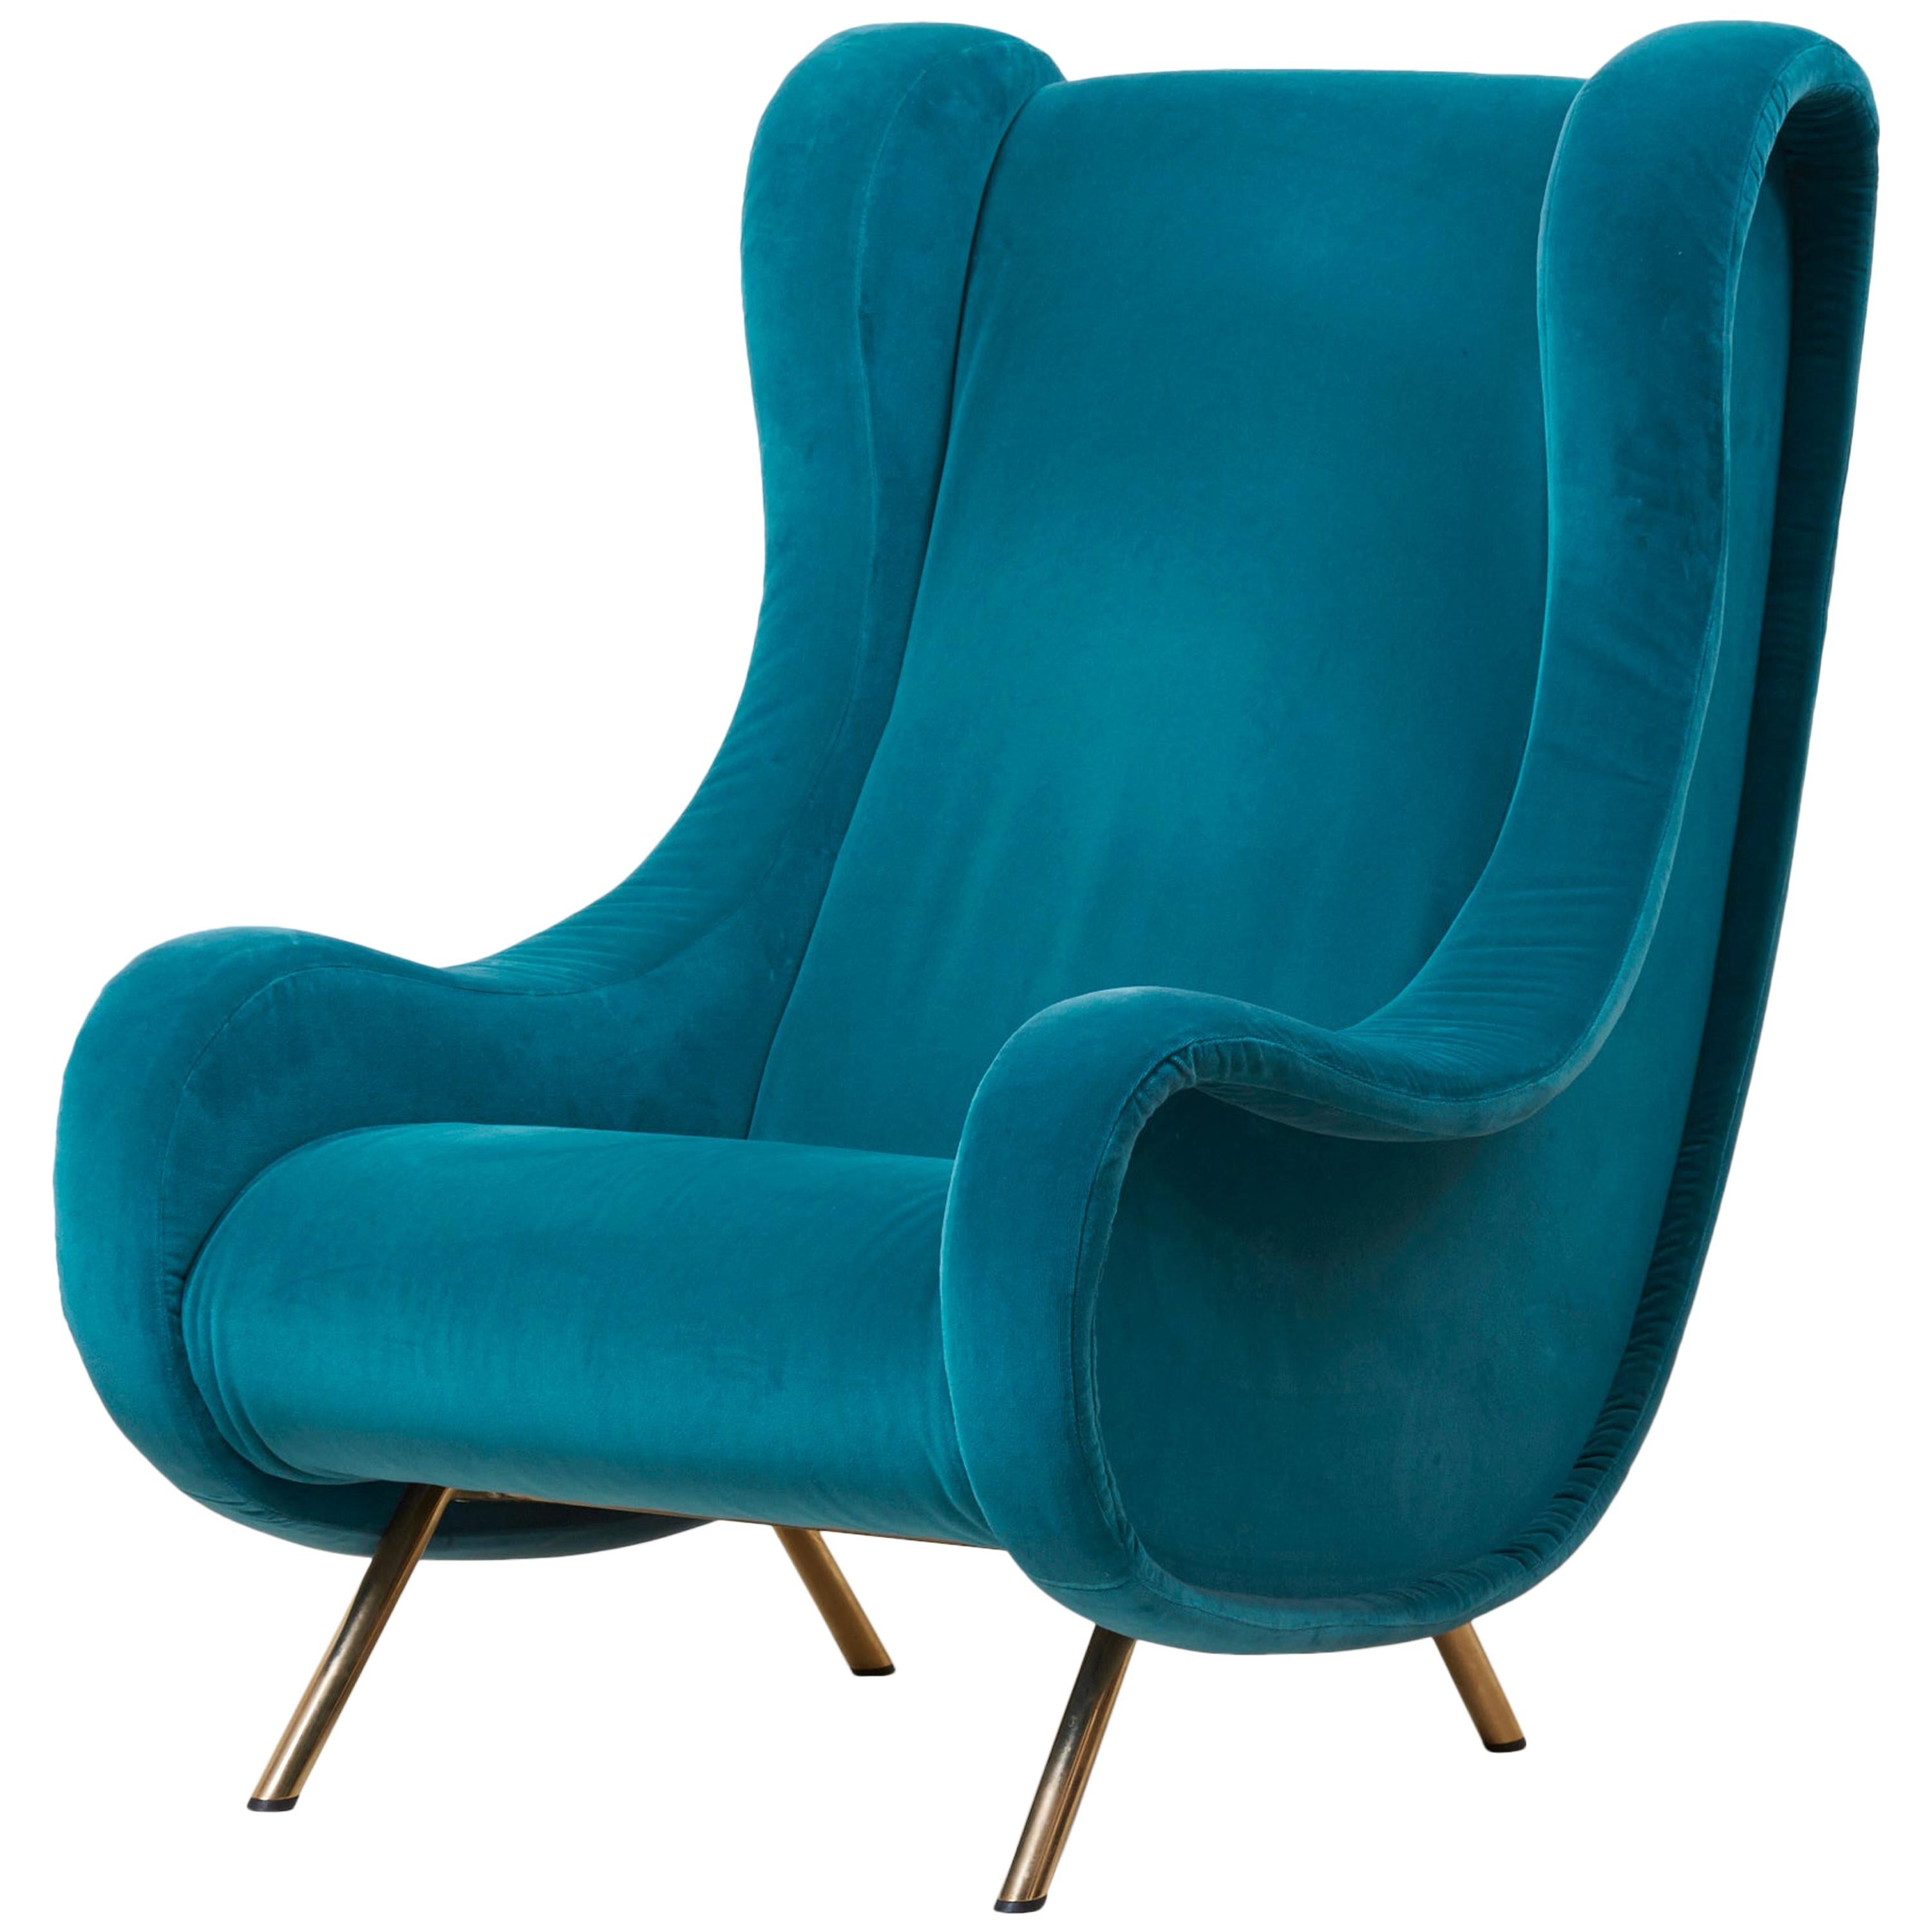 Senior Lounge Chair in Blue Velvet by Marco Zanuso for Arflex, Italy, 1955